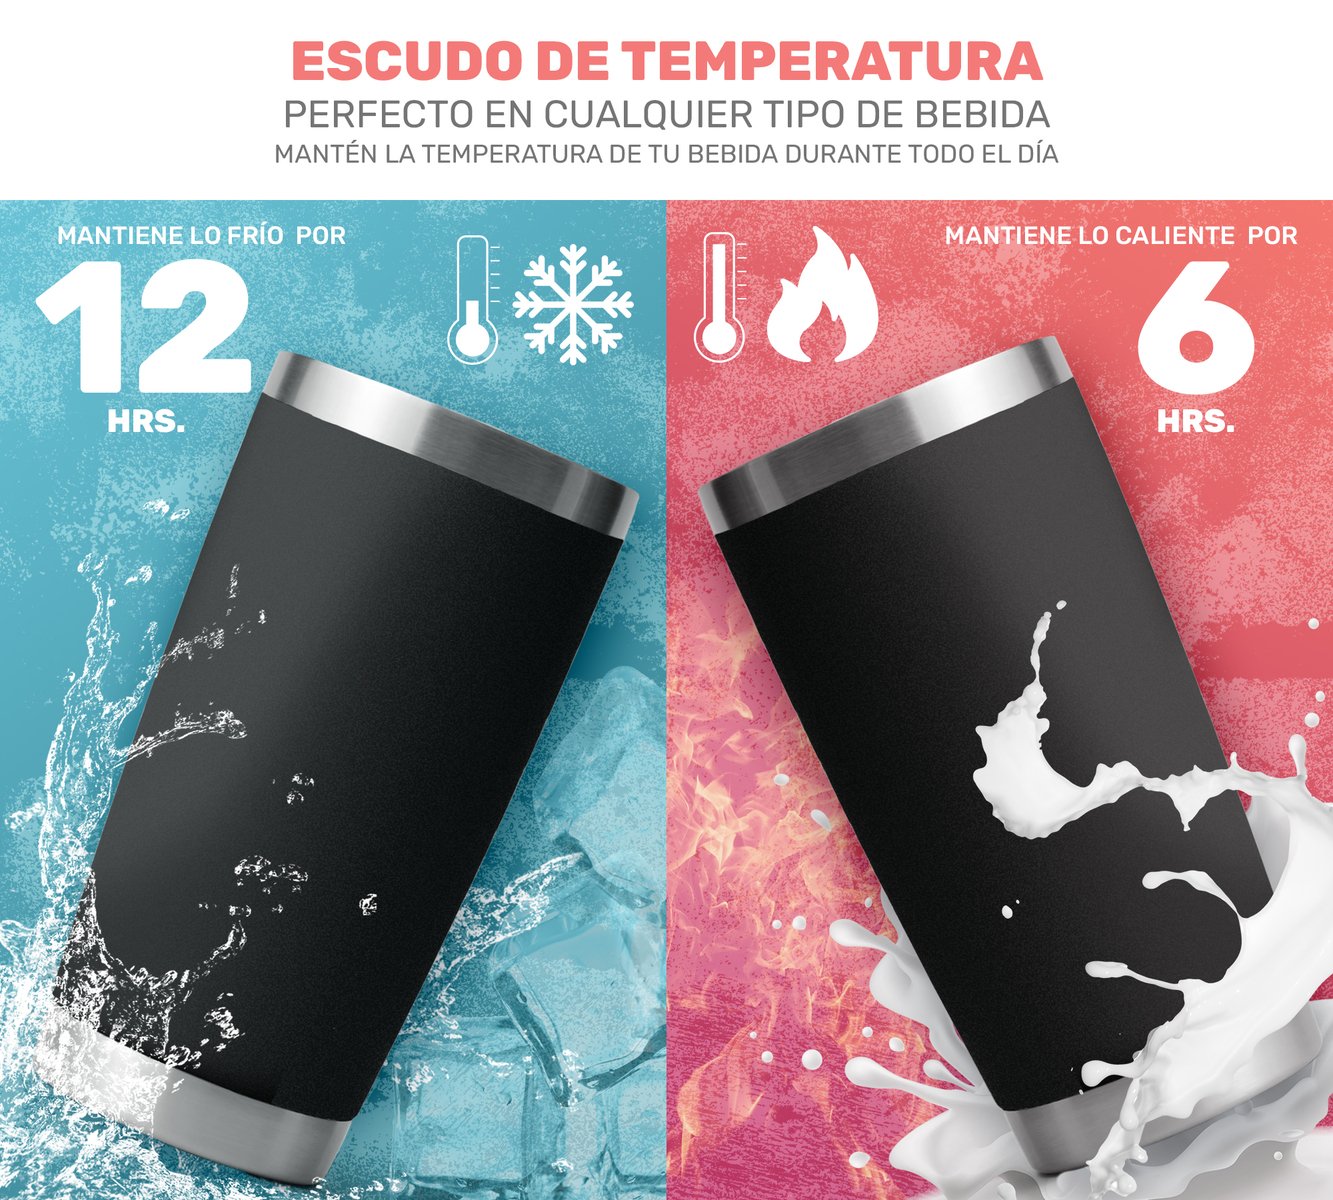 Thermo Taza C/ Aislamiento Al Vacio 1,5 L. Reduce 48hrs Frío